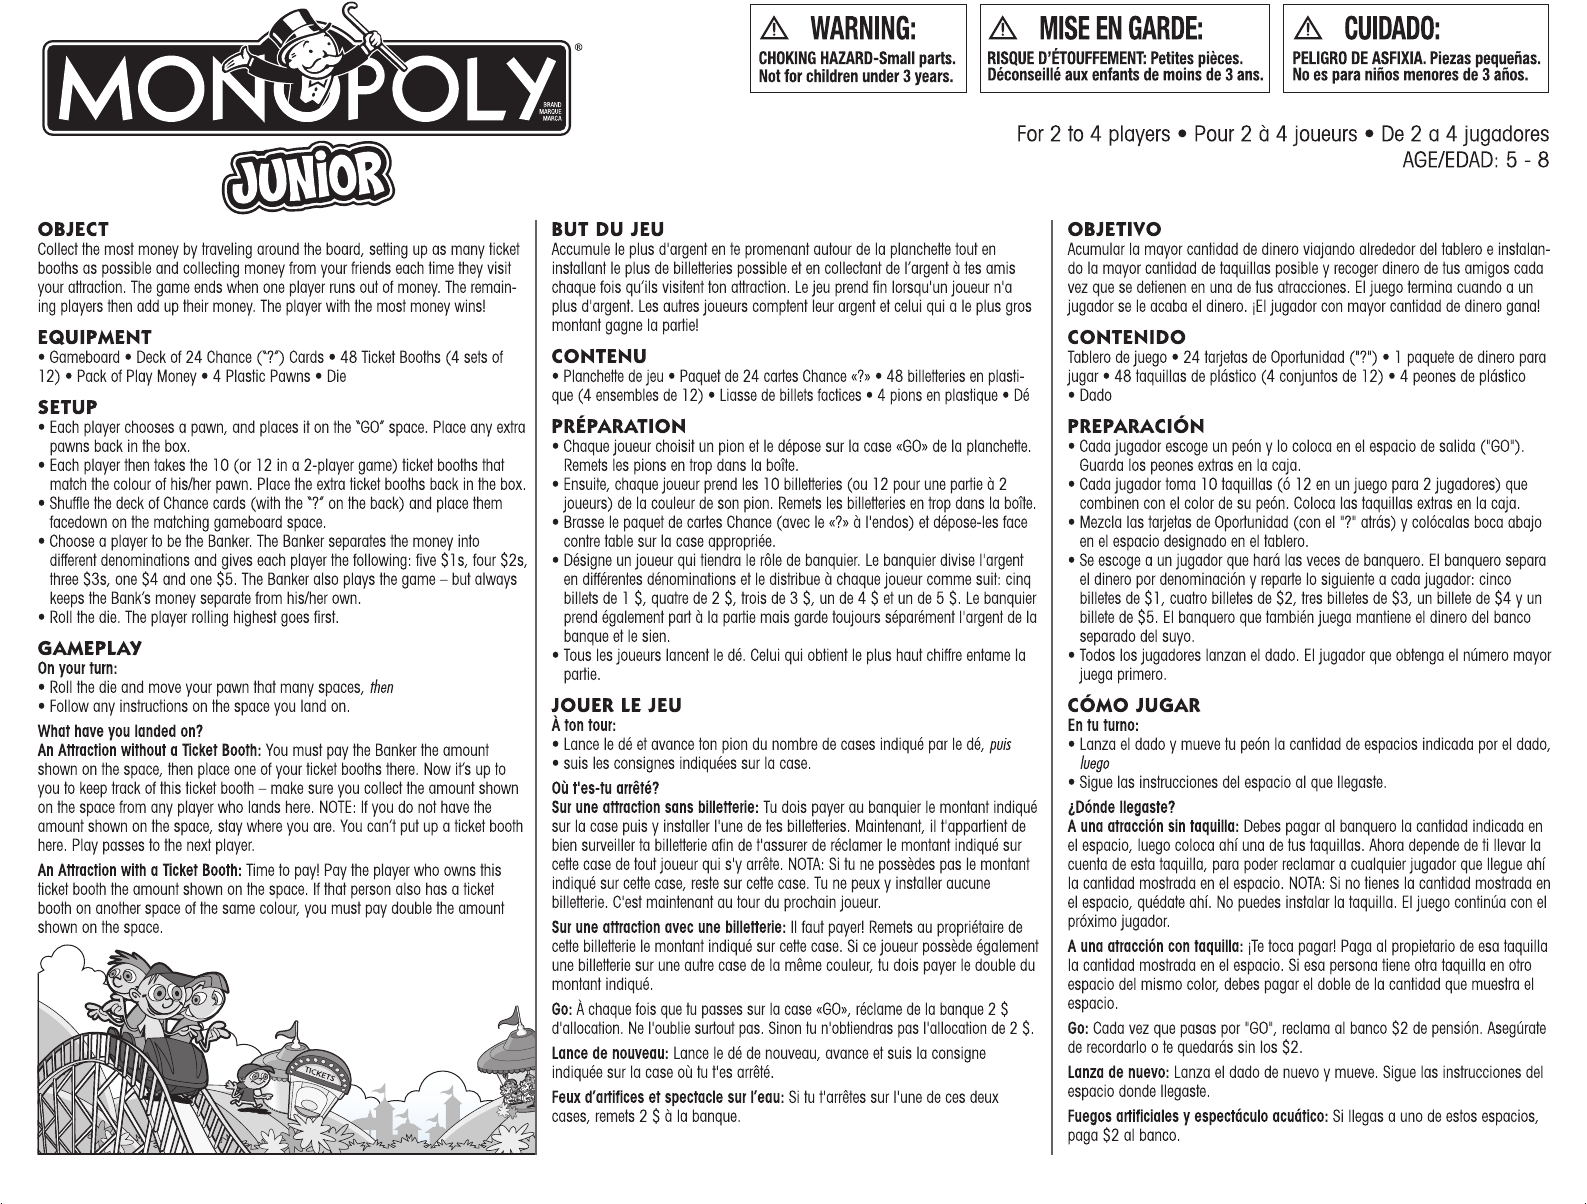 Tom Audreath Ondergeschikt Gemakkelijk Manual Hasbro MONOPOLY Junior (page 1 of 2) (English, French, Spanish)